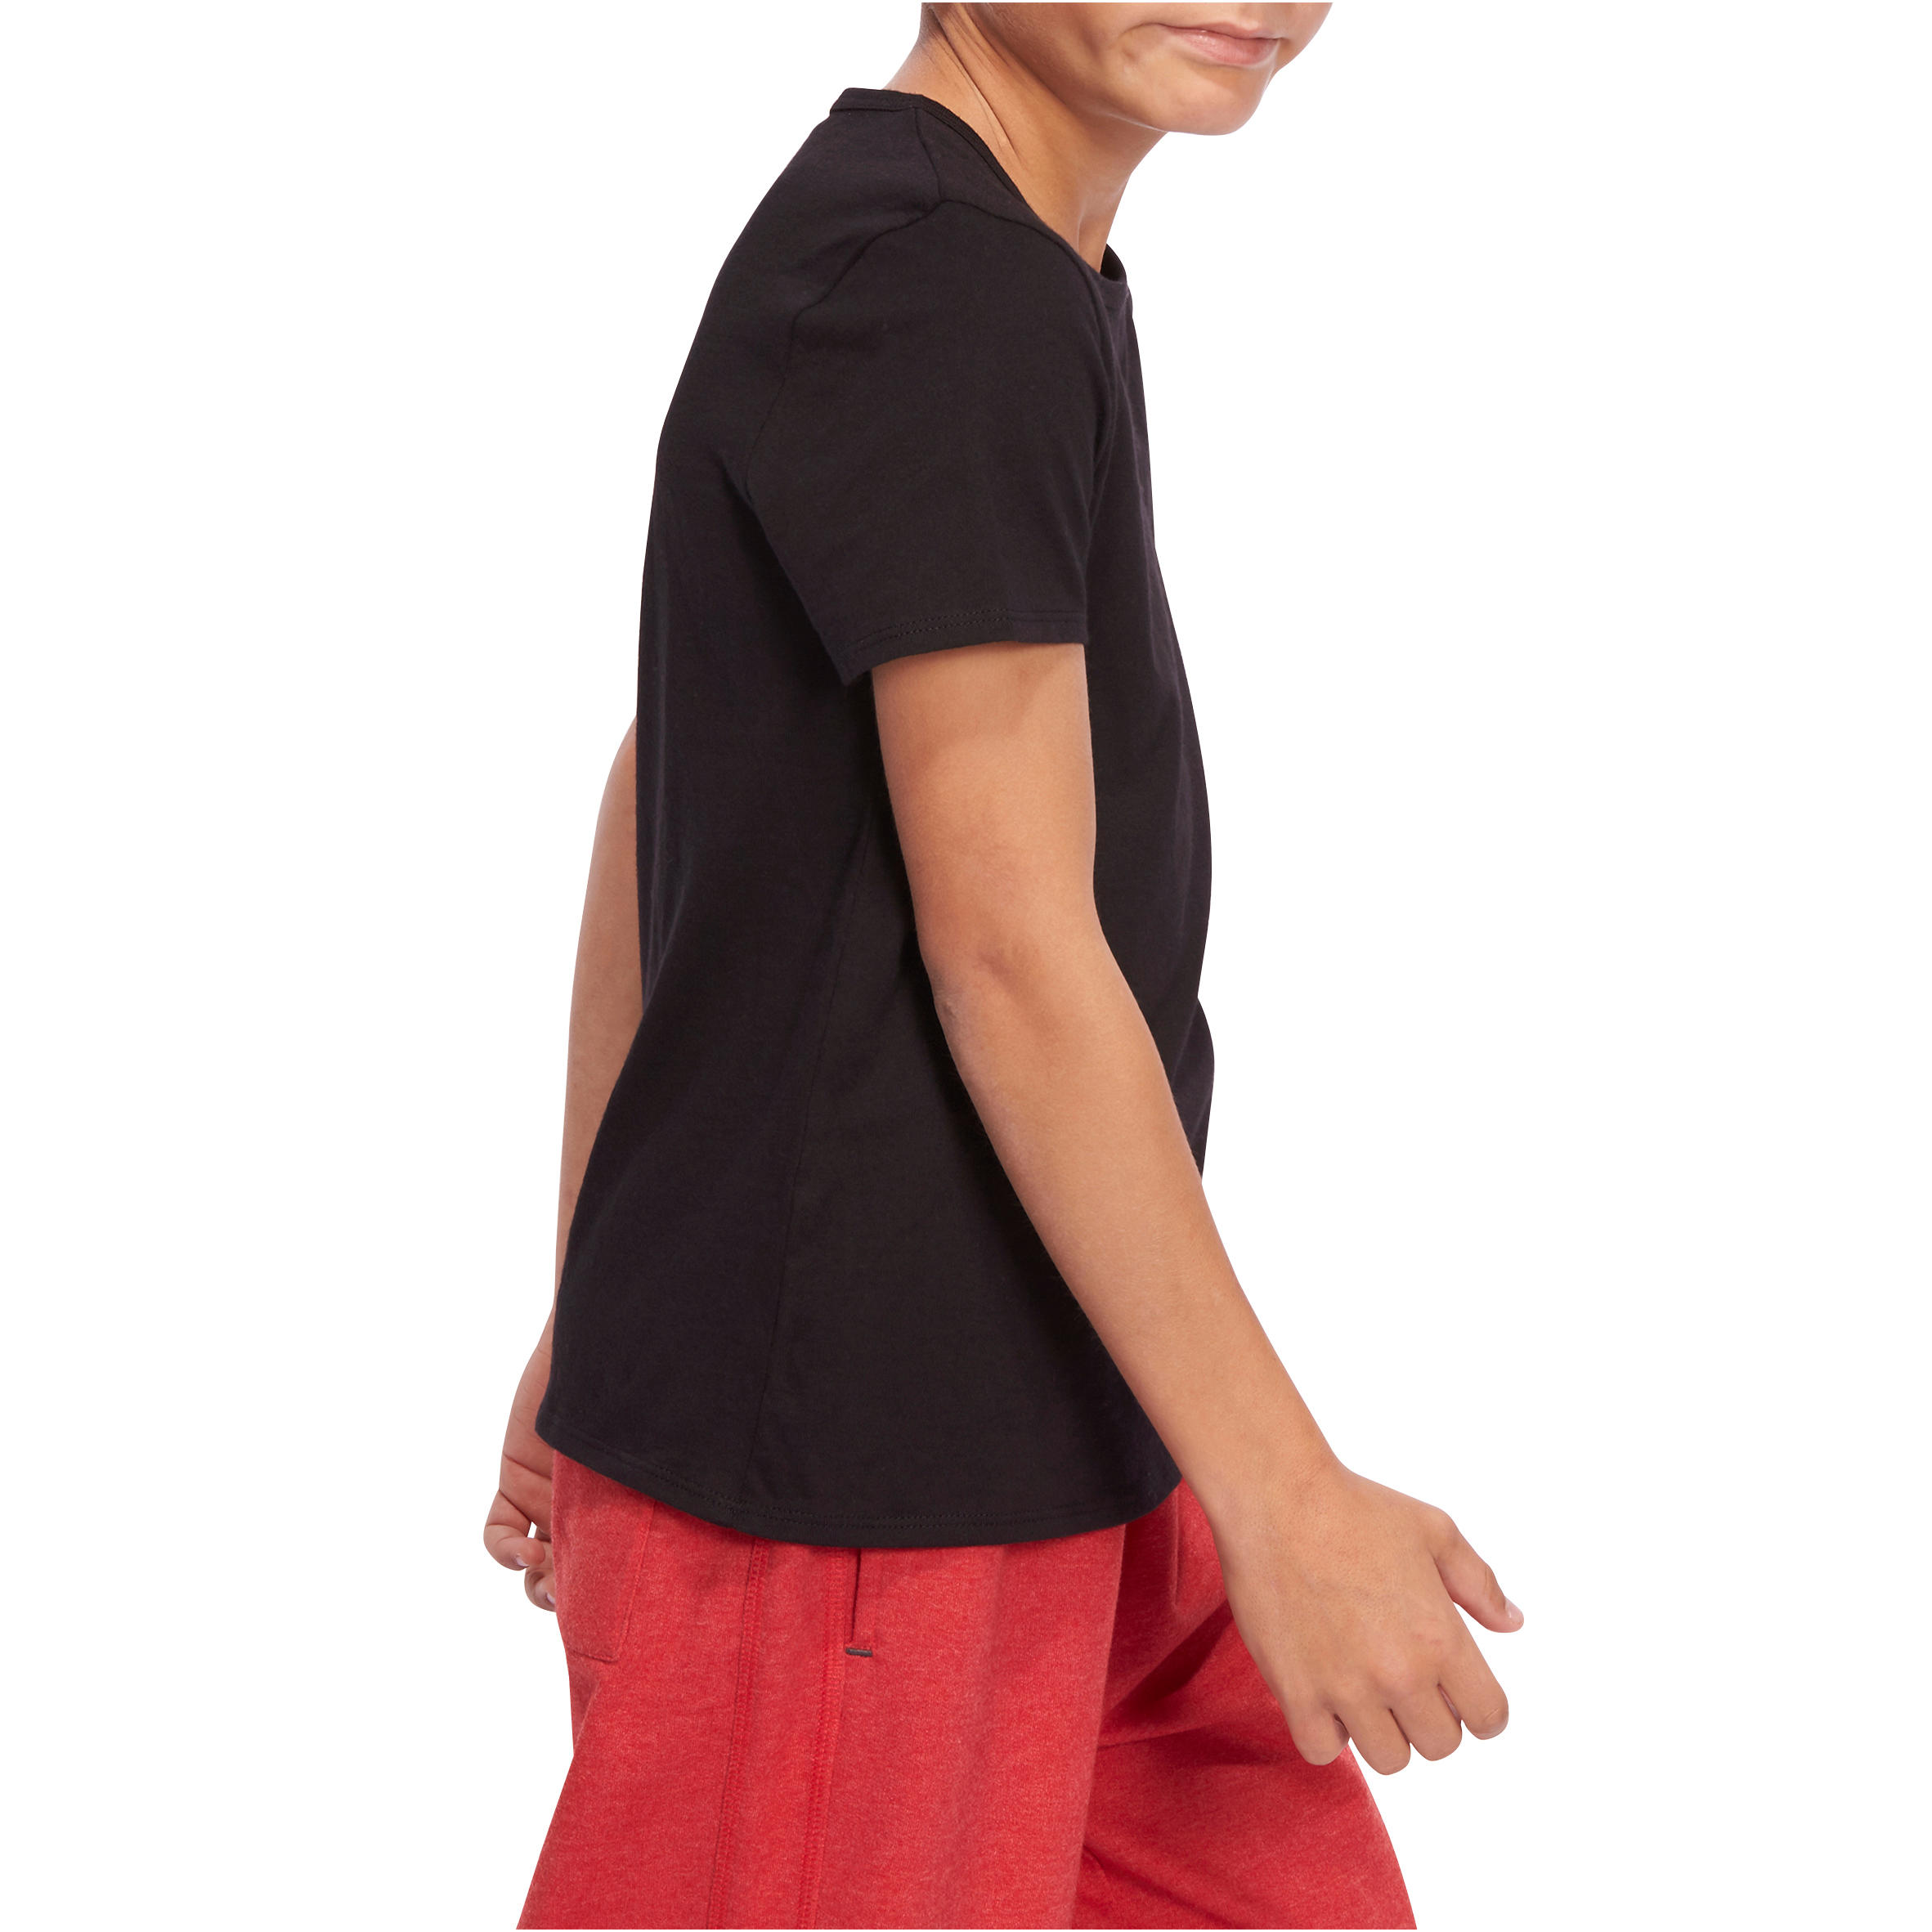 100 Boys' Short-Sleeved Gym T-Shirt - Black 6/8